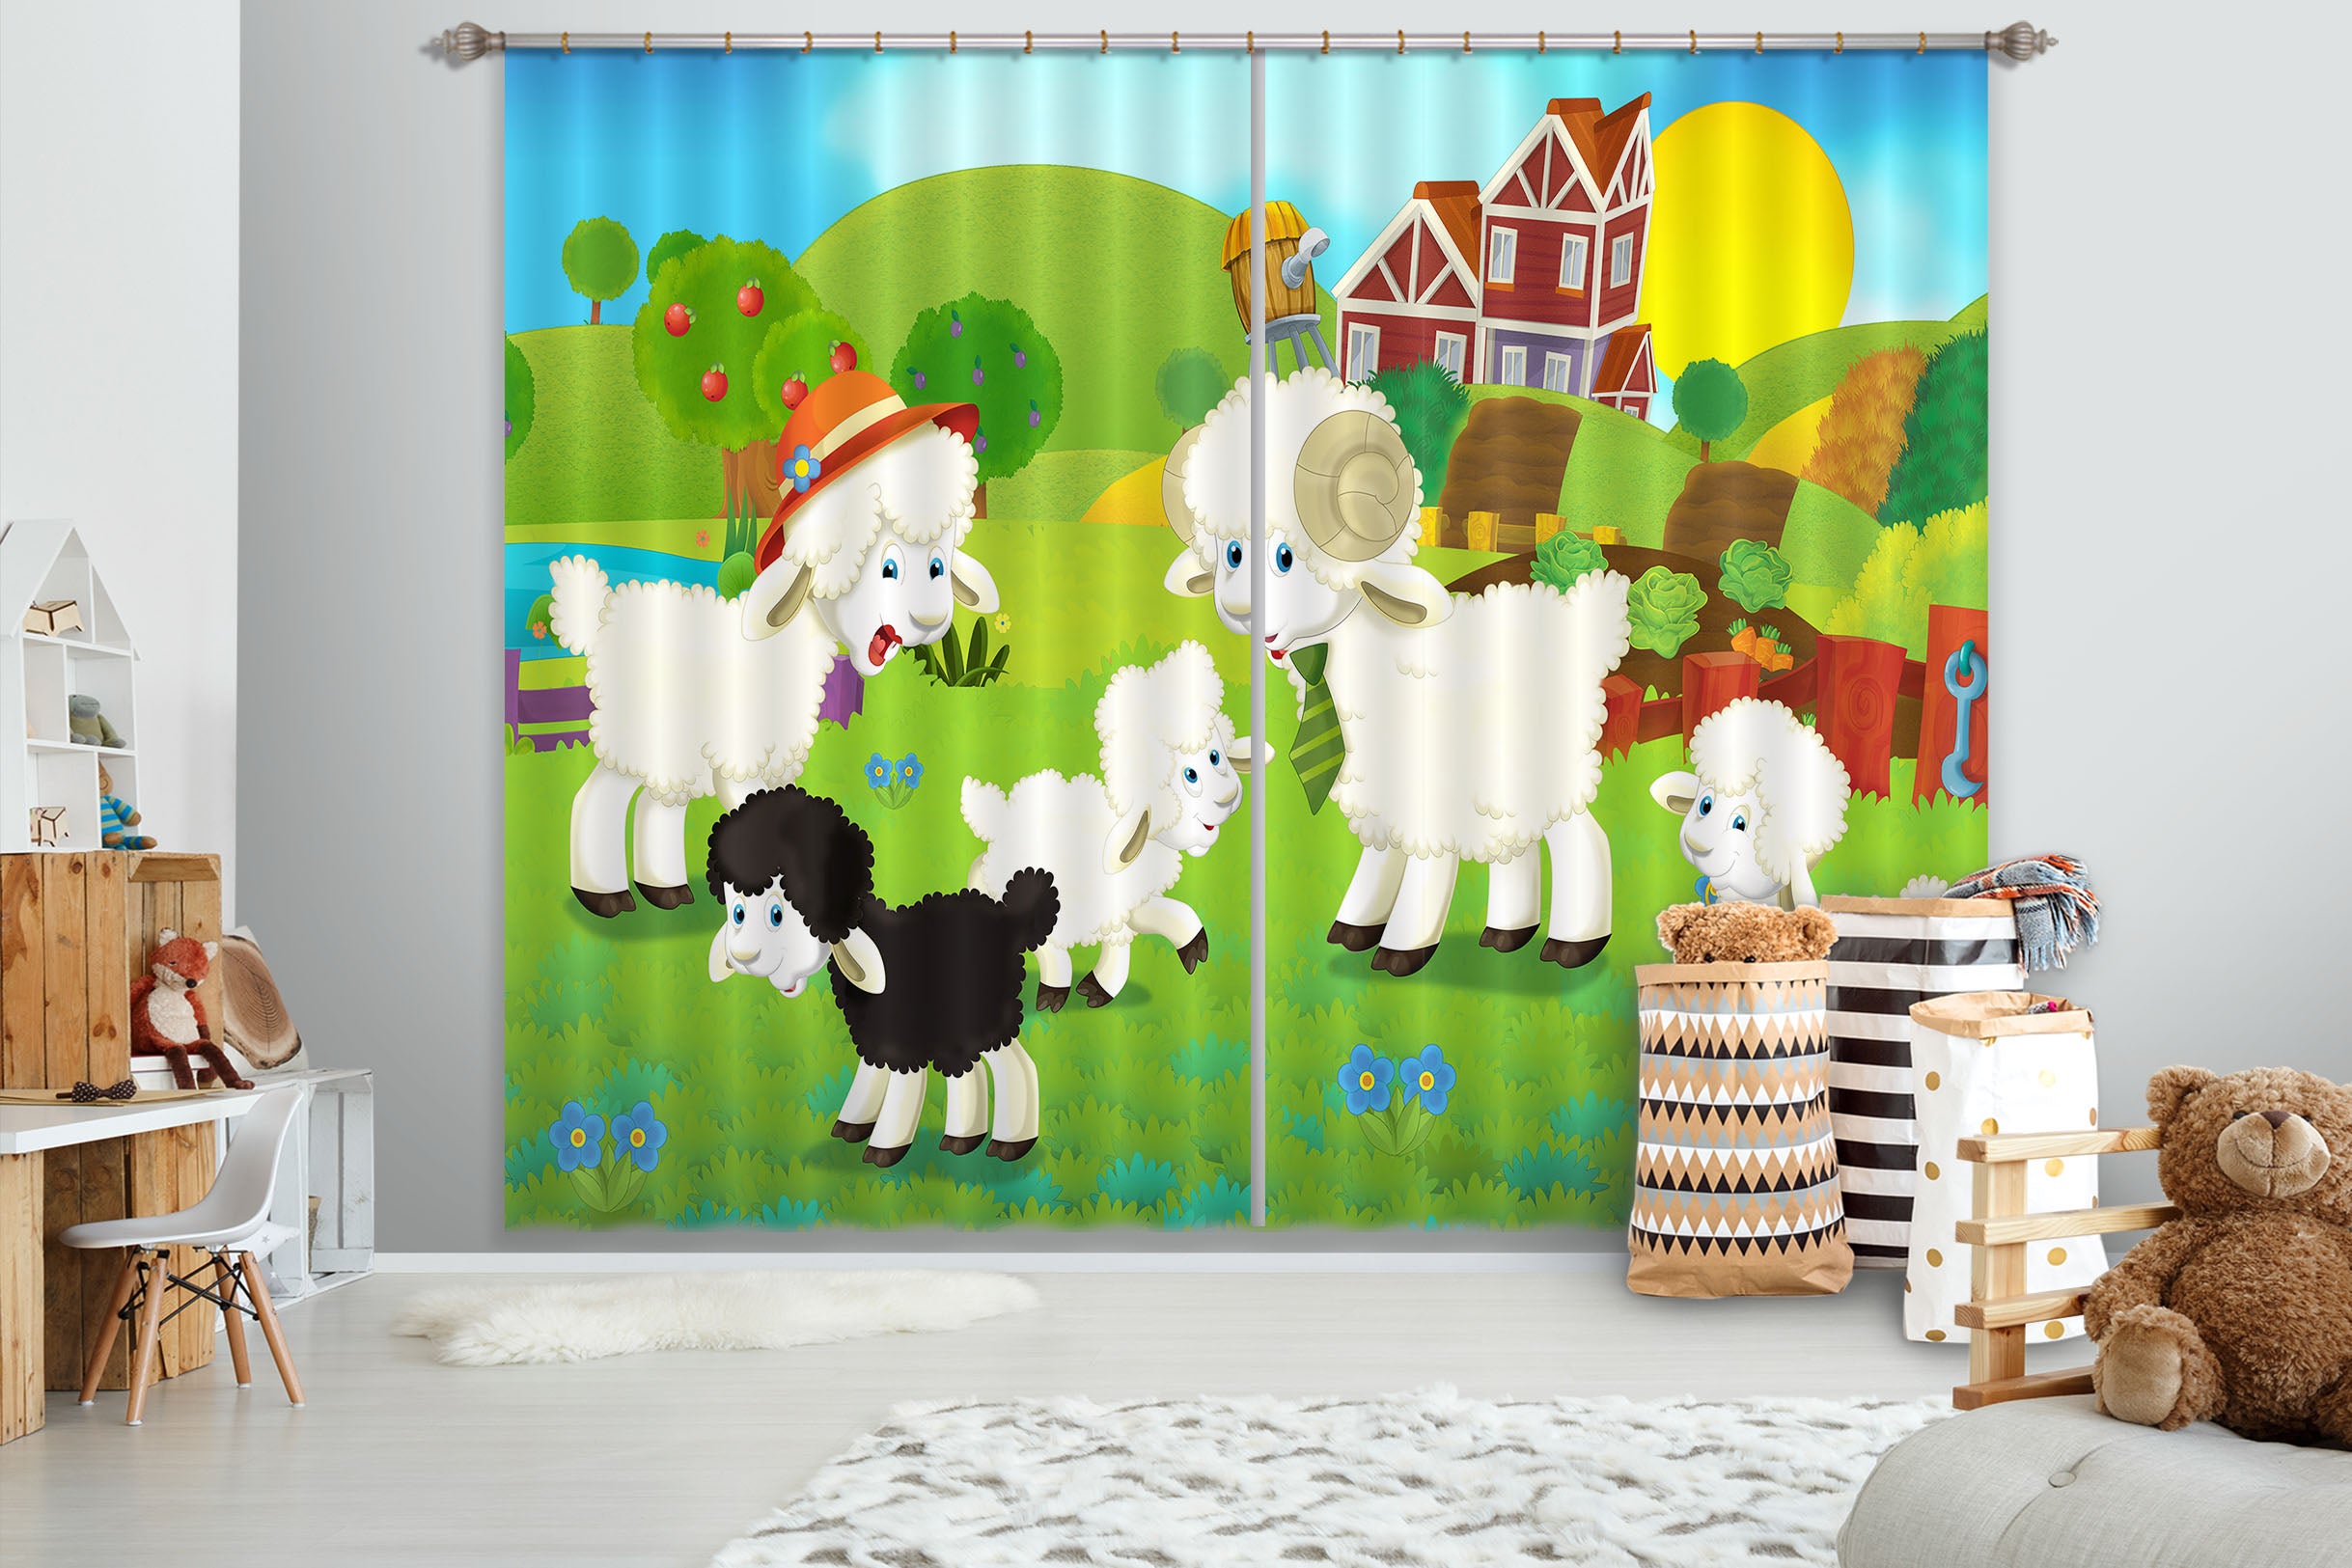 3D Cow Farm 713 Curtains Drapes